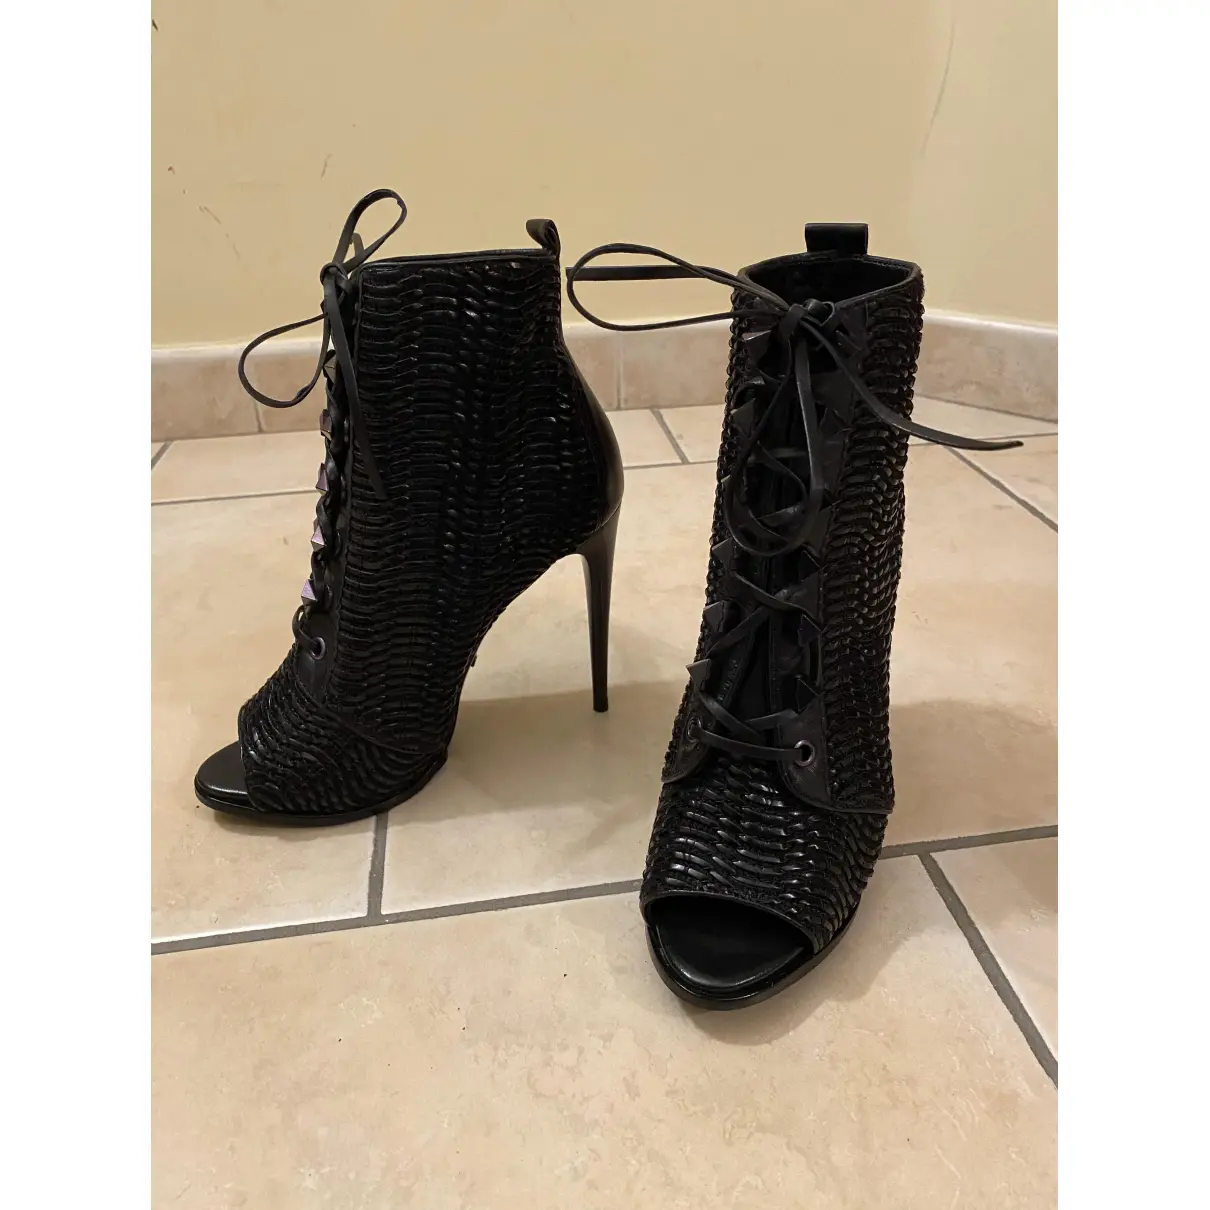 Buy Schutz Lace up boots online